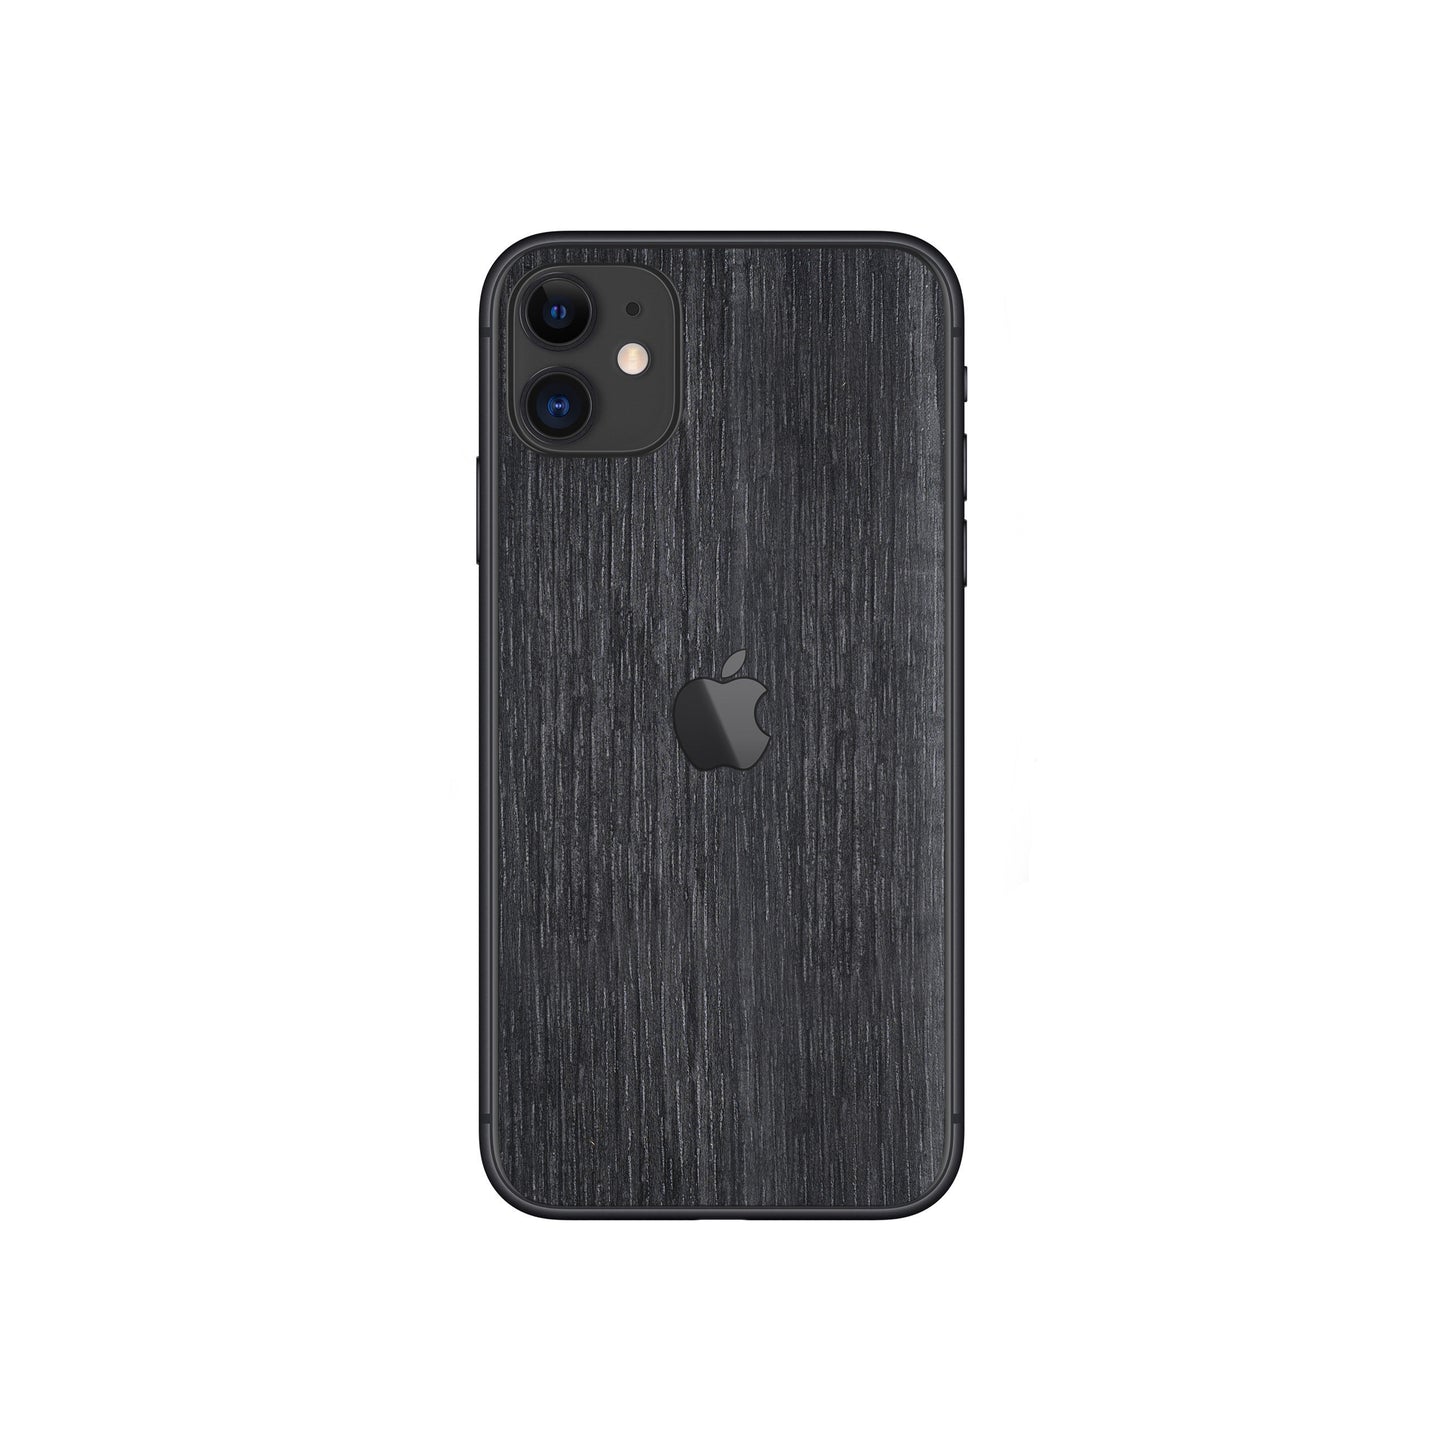 ScreenFilm™ Wood Series Back Skin - Phone (One Size Fits All)